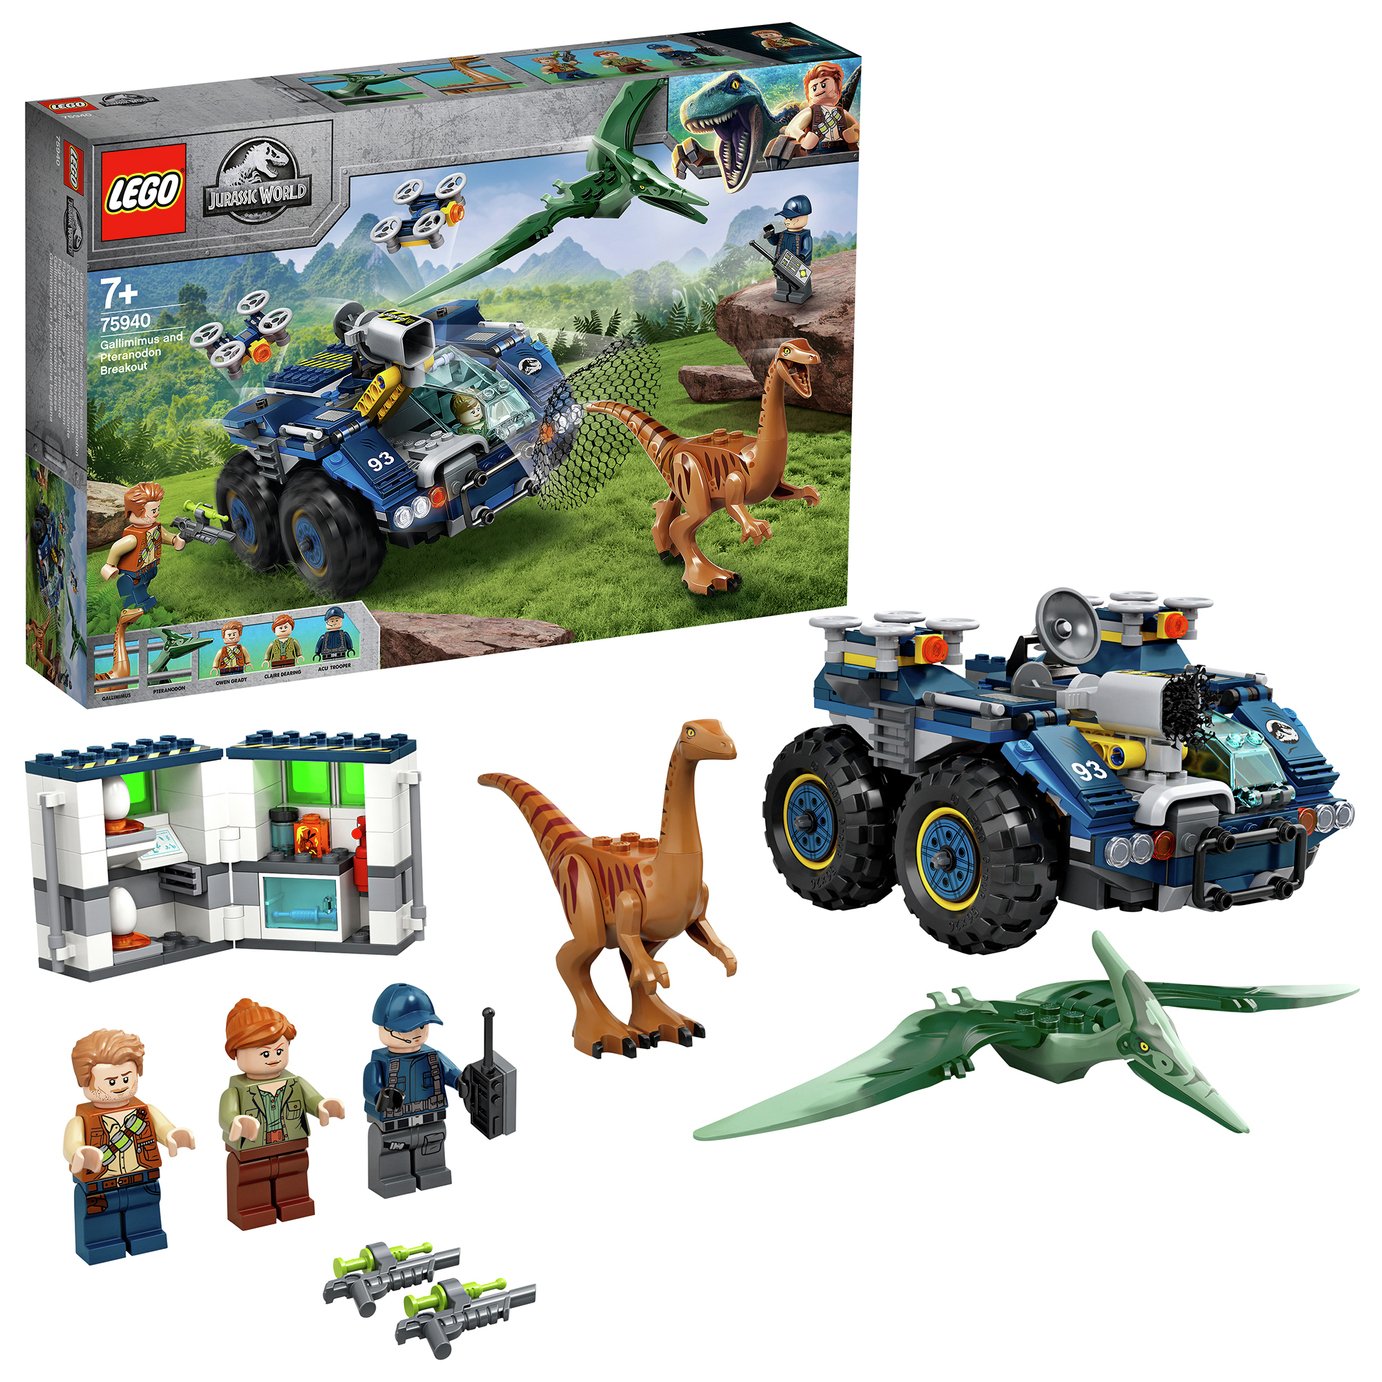 Buy LEGO Jurassic World Pteranodon 